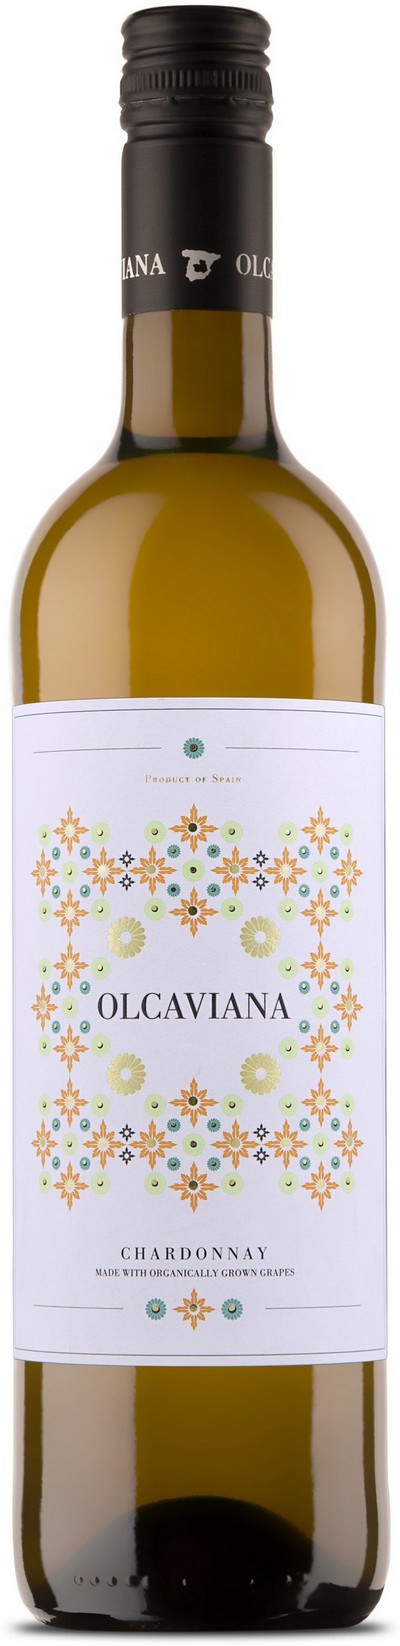 olcaviana-chardonnay-2018